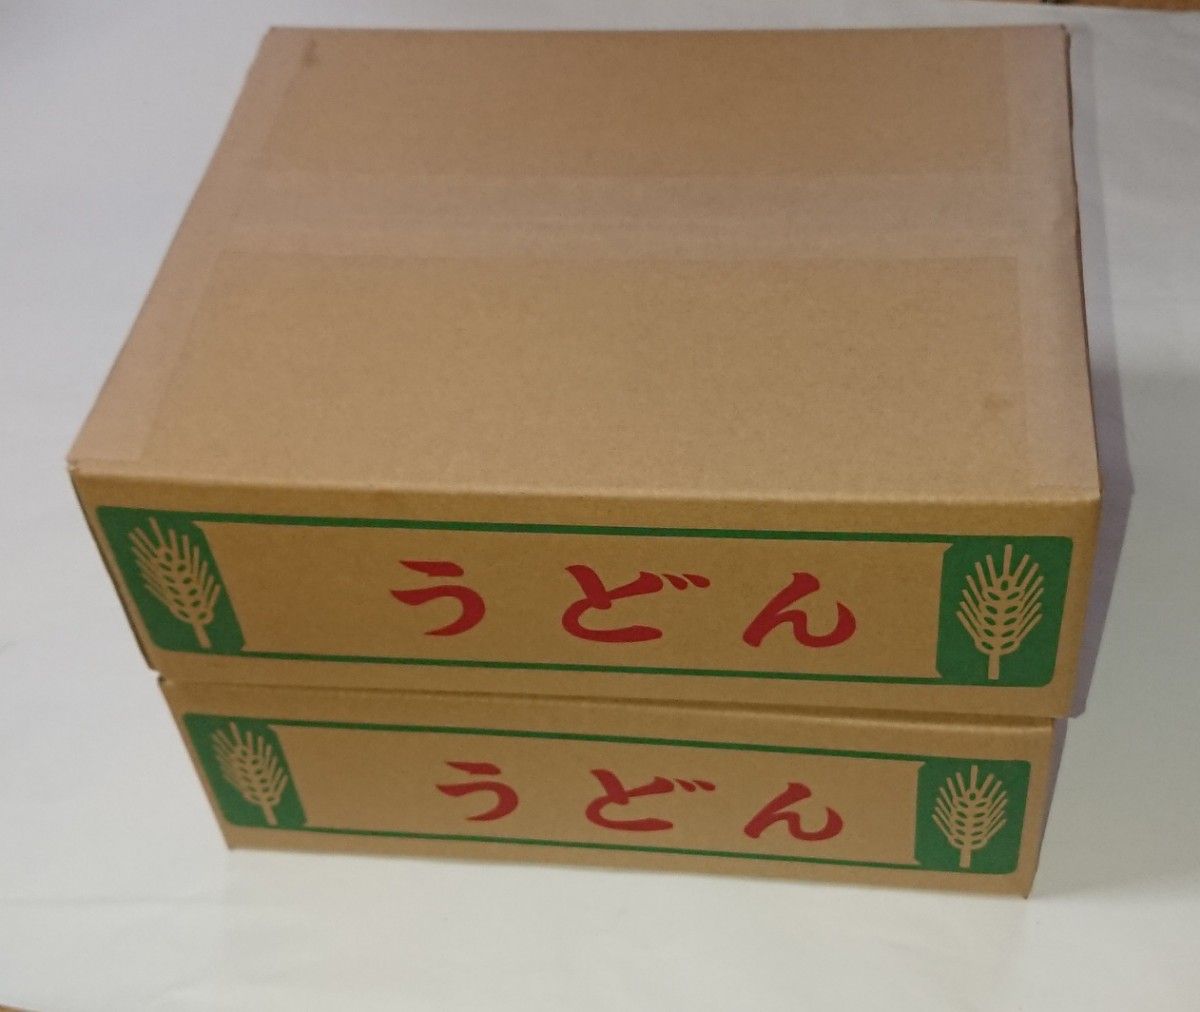 【cr1********様専用】うどん(緑) 30袋入りを2箱(合計60袋)